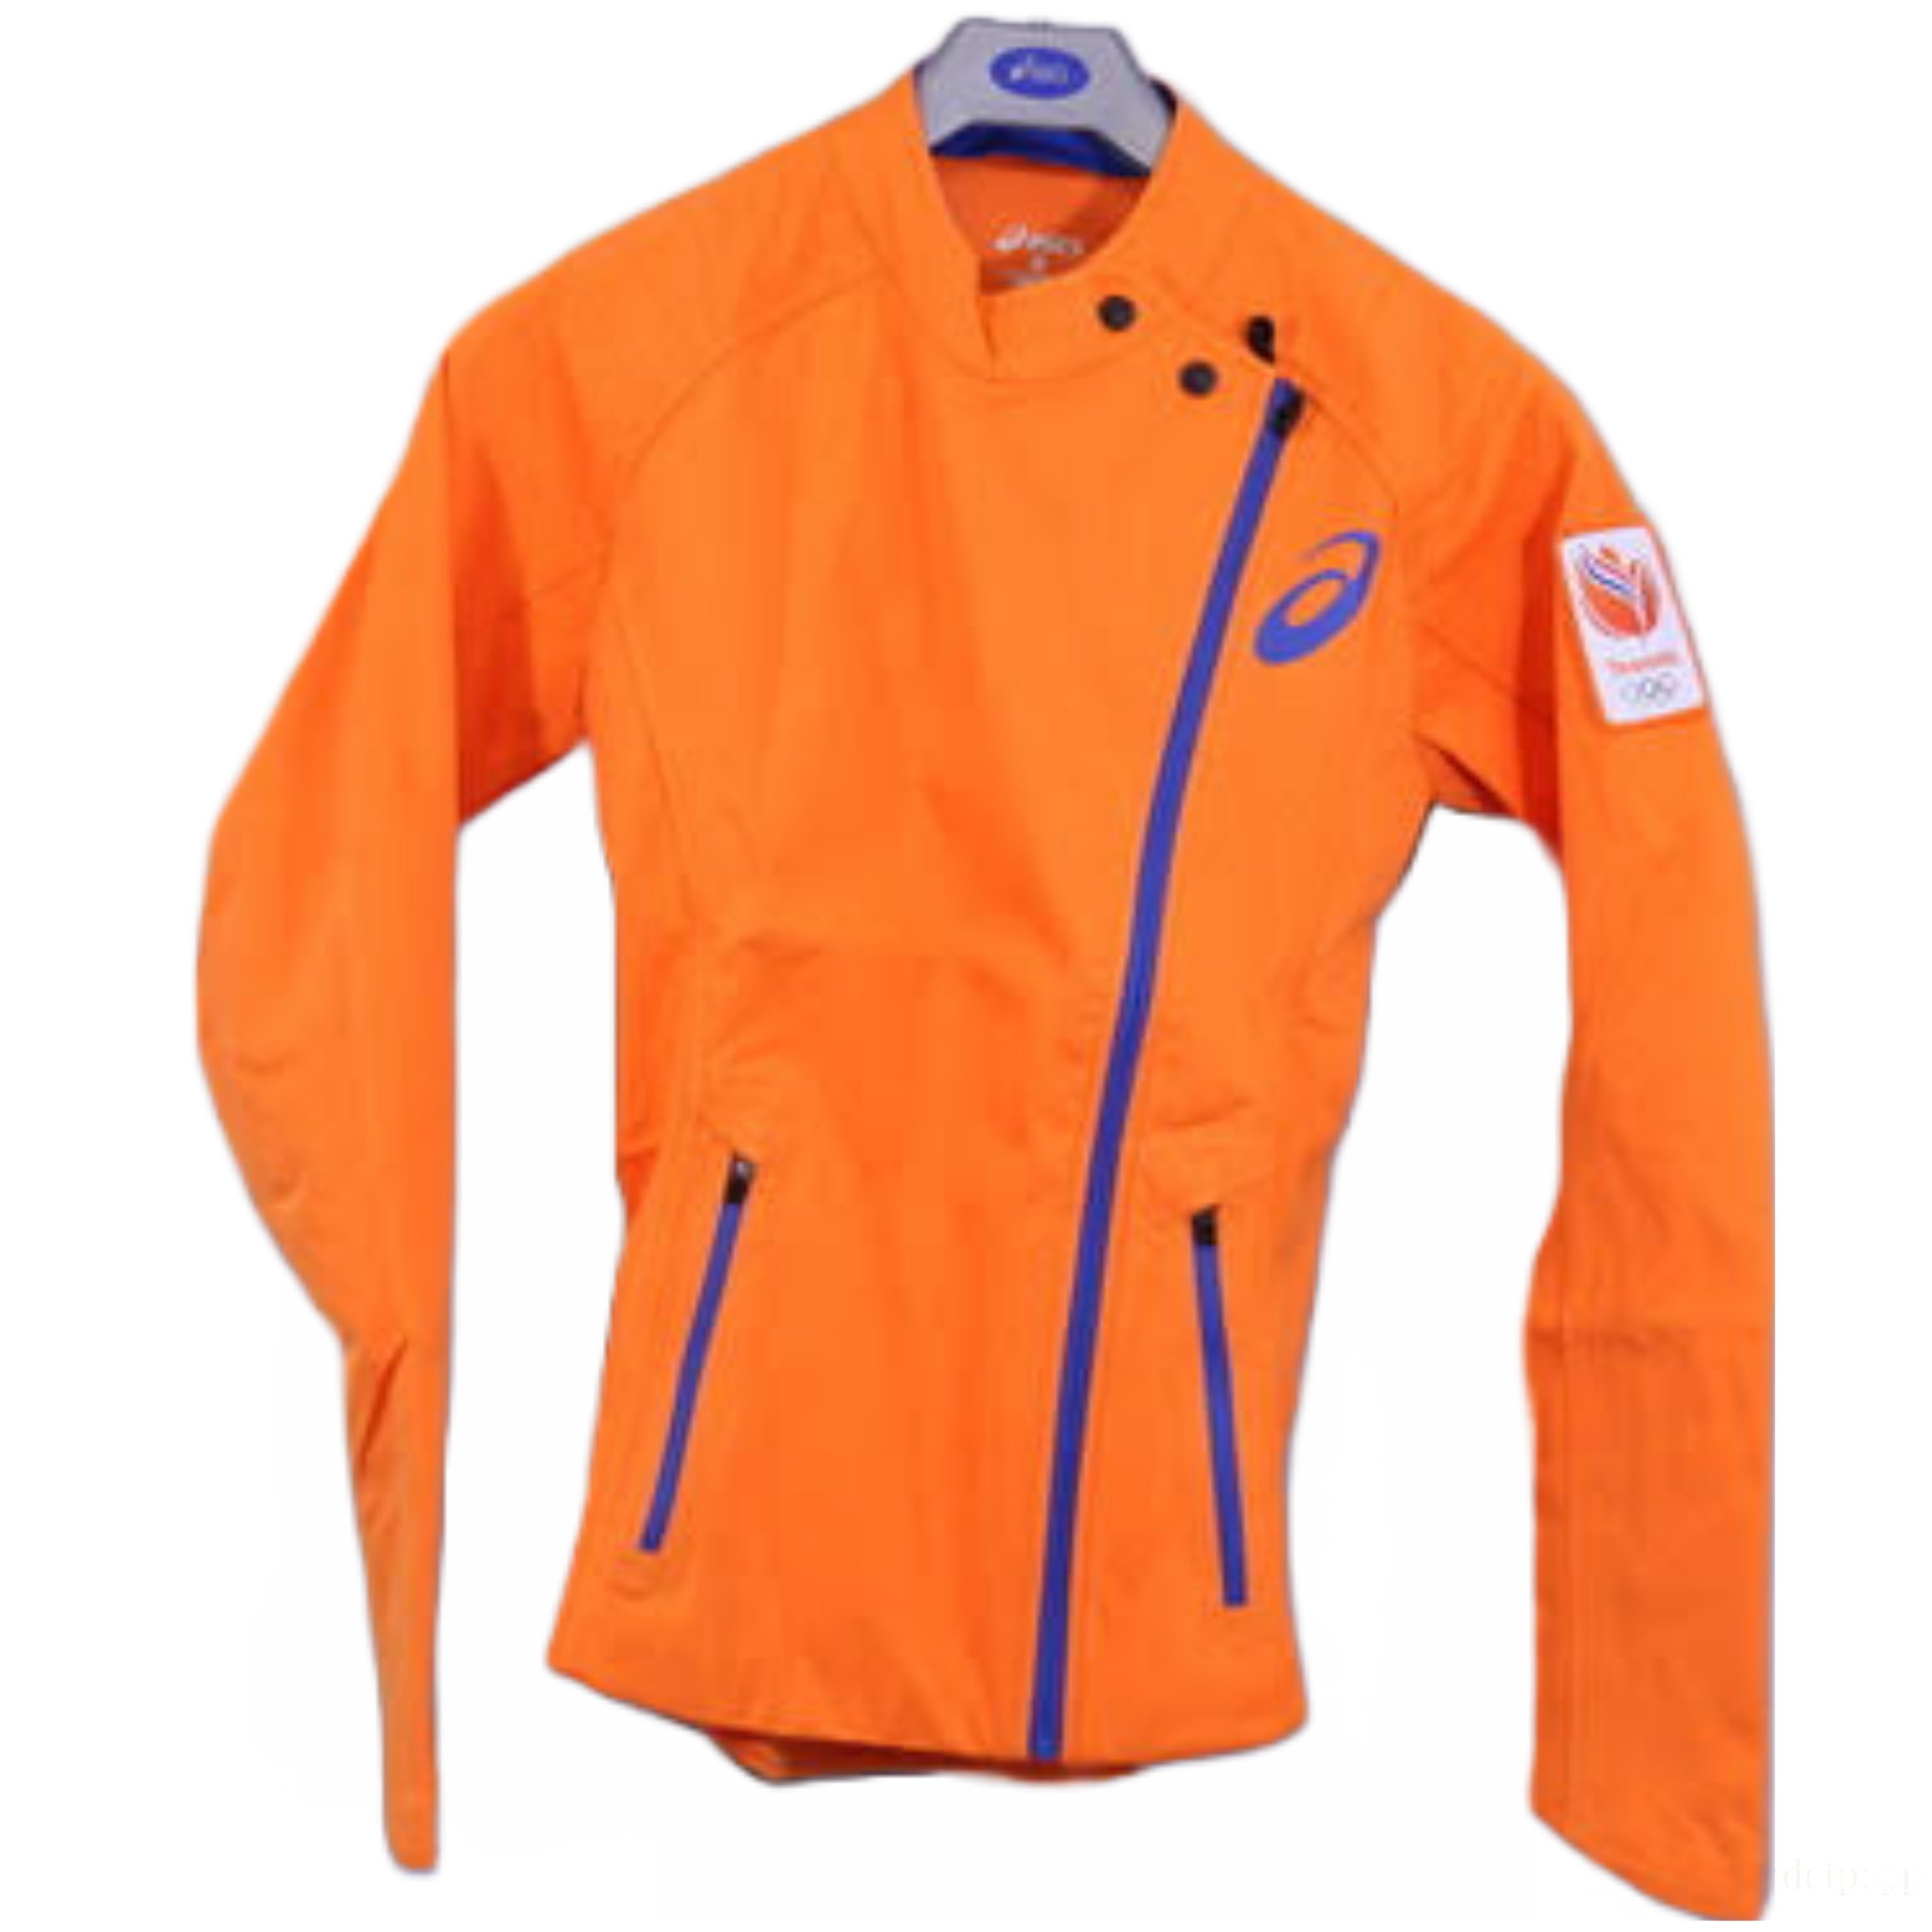 Asics Rio 2016 Team NL Asymmetric Jacket.jpg